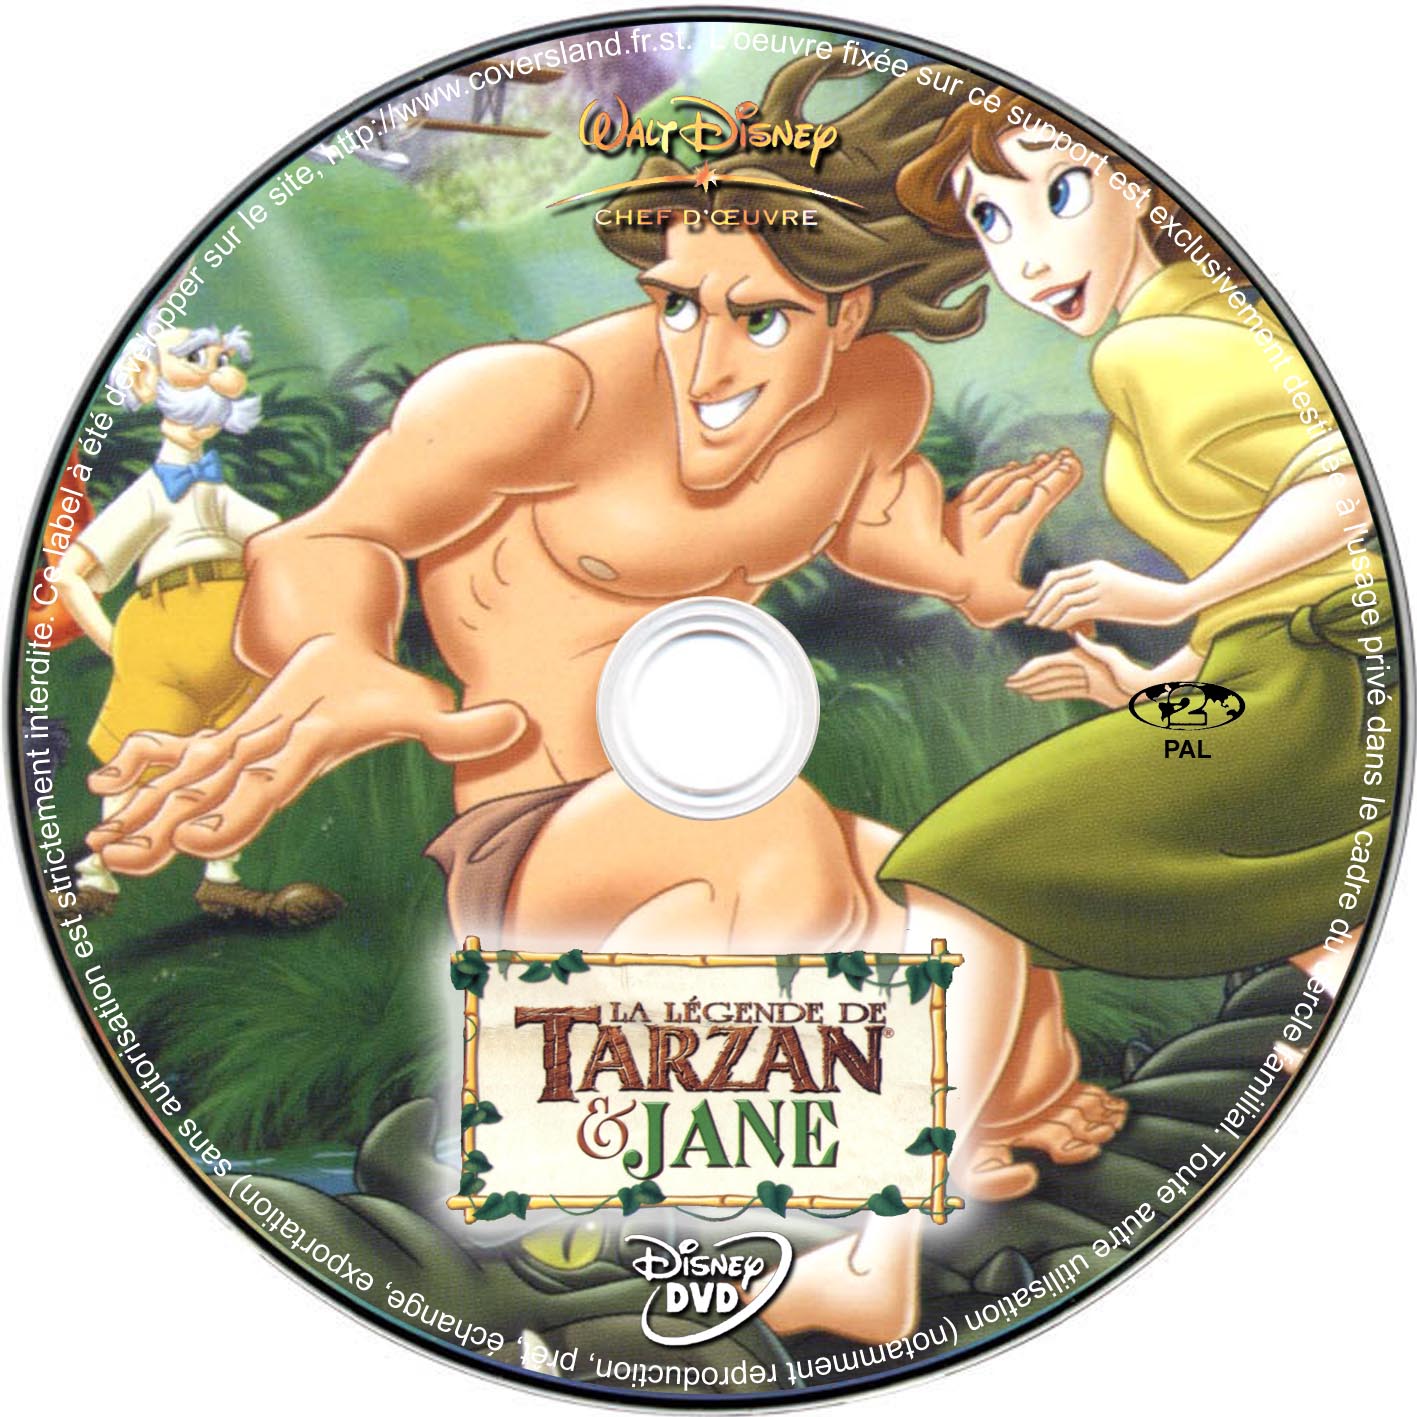 La lgende de Tarzan et Jane